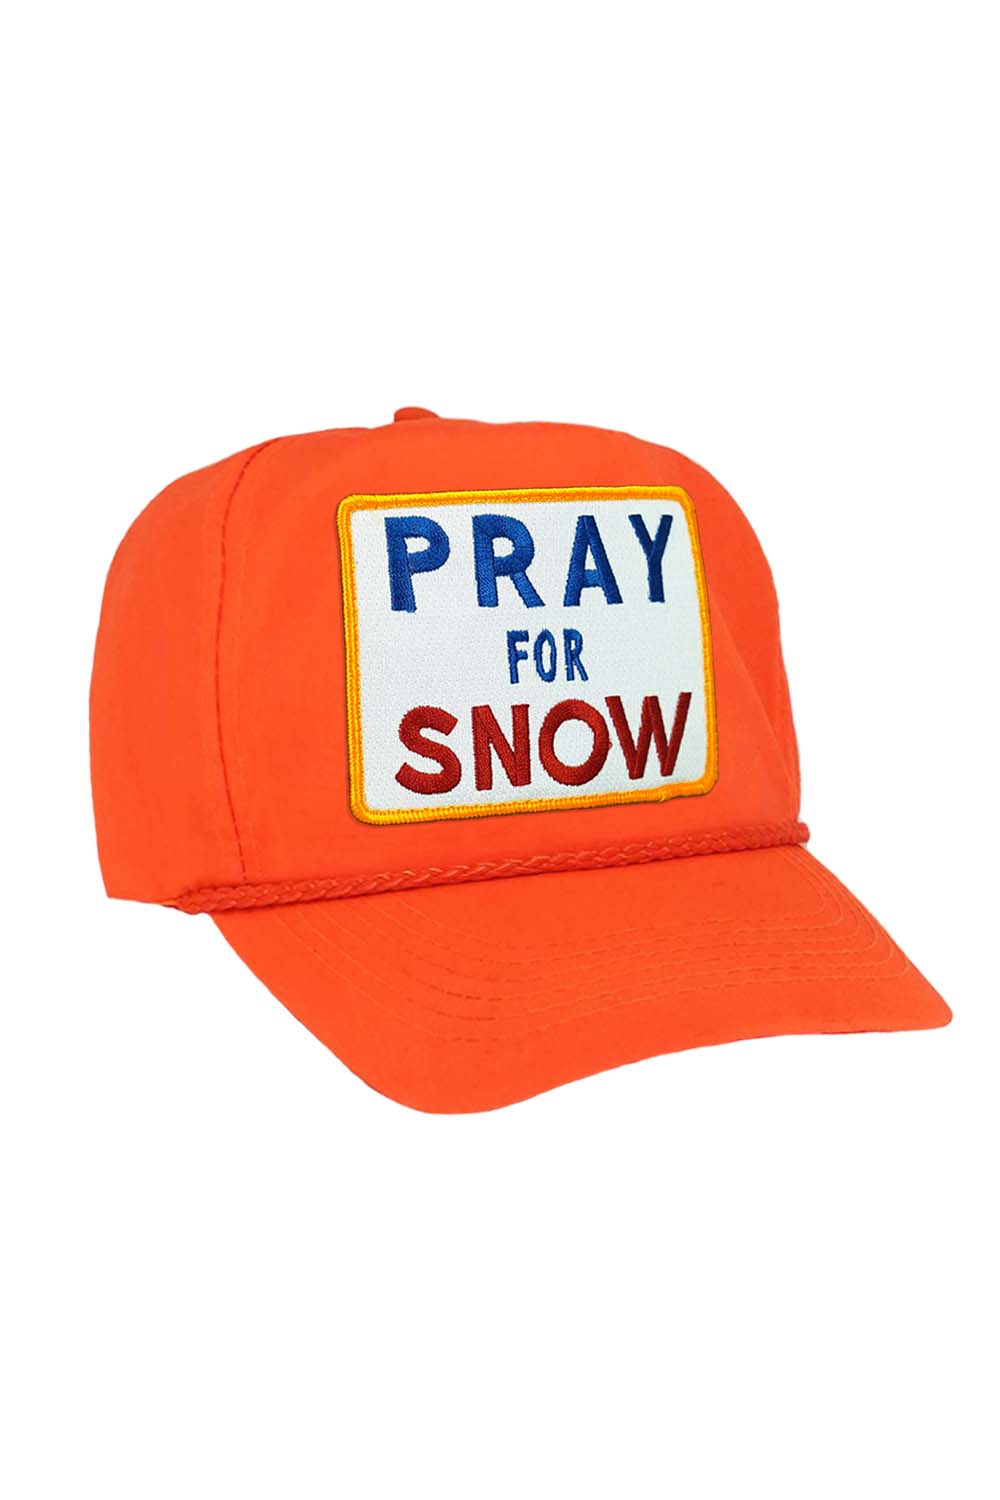 PRAY FOR SNOW - VINTAGE NYLON TRUCKER HAT HATS Aviator Nation NEON ORANGE 